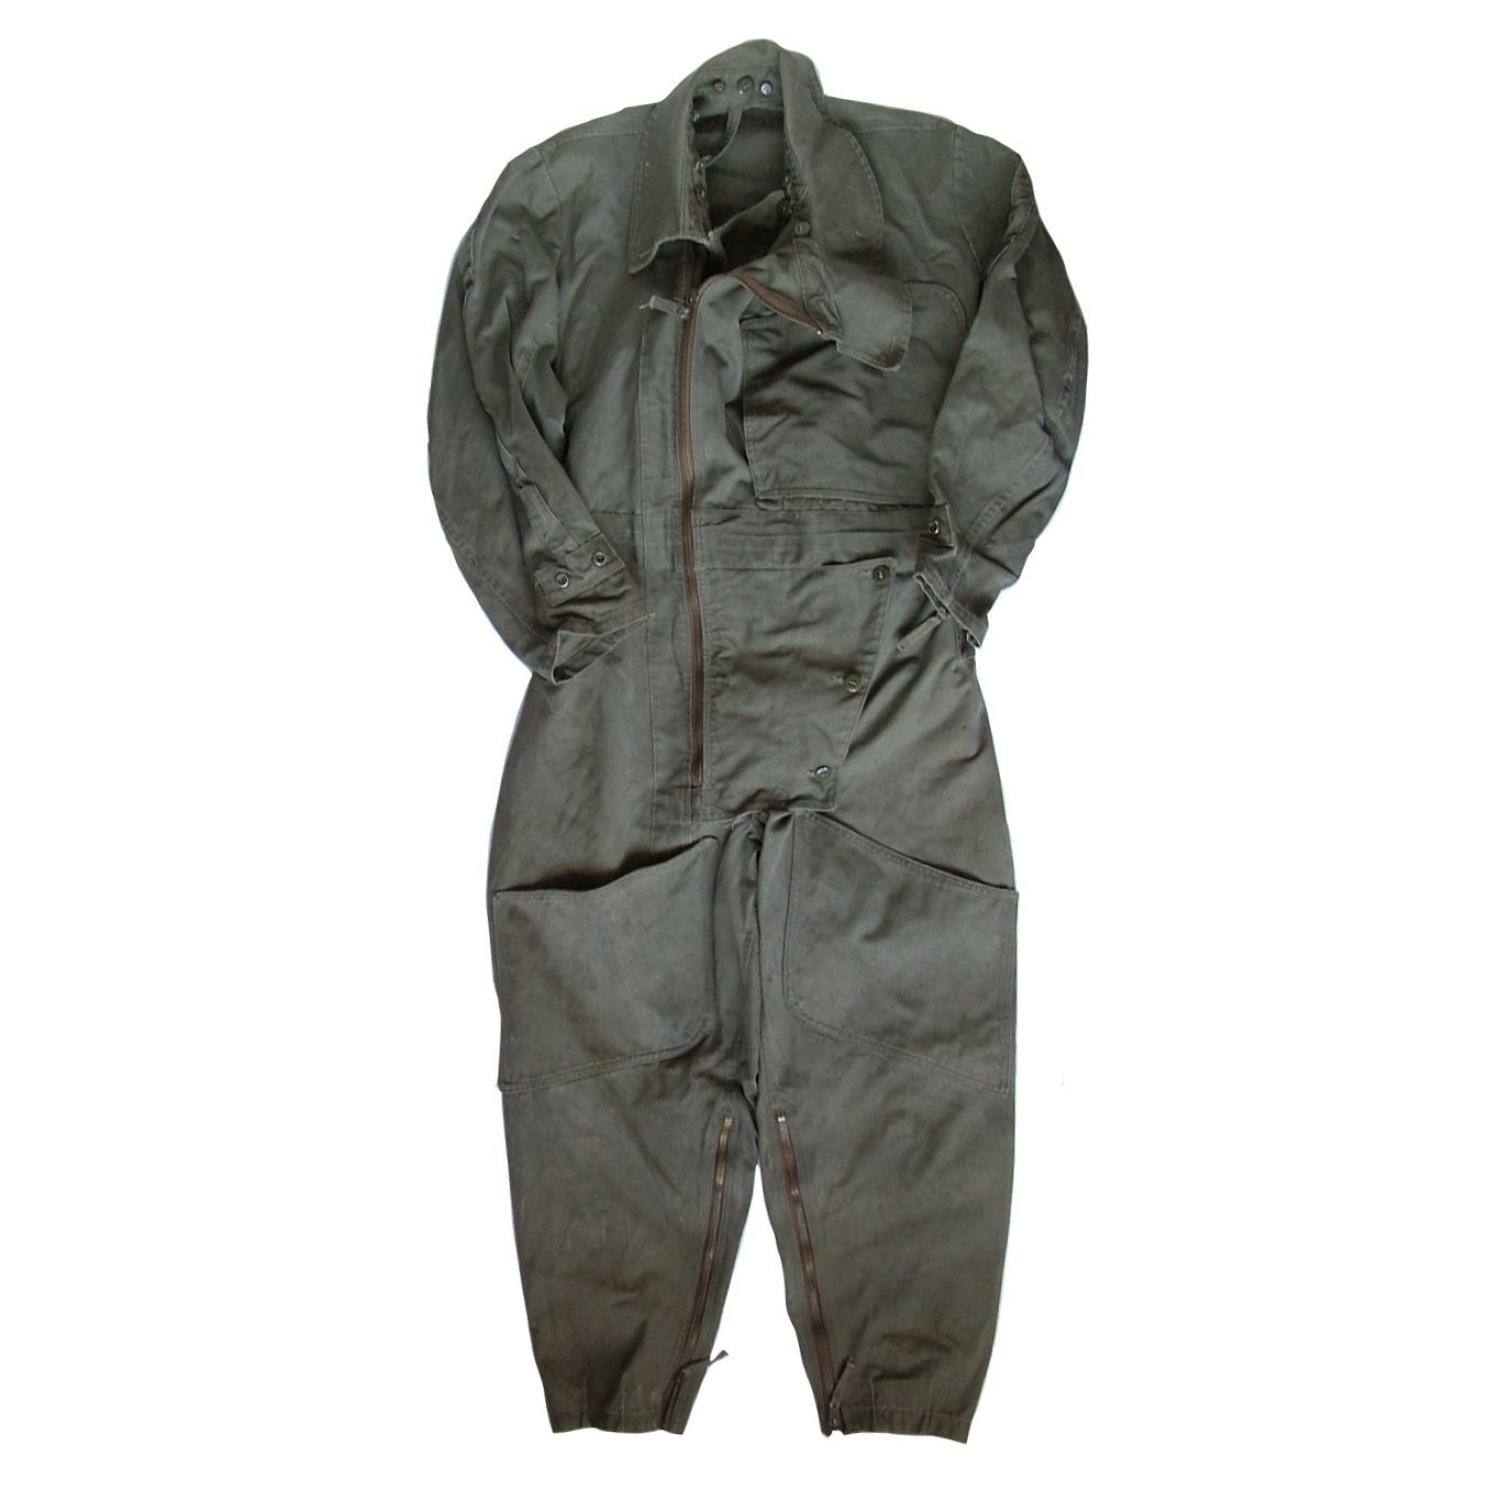 RAF 1941 pattern Sidcot suit